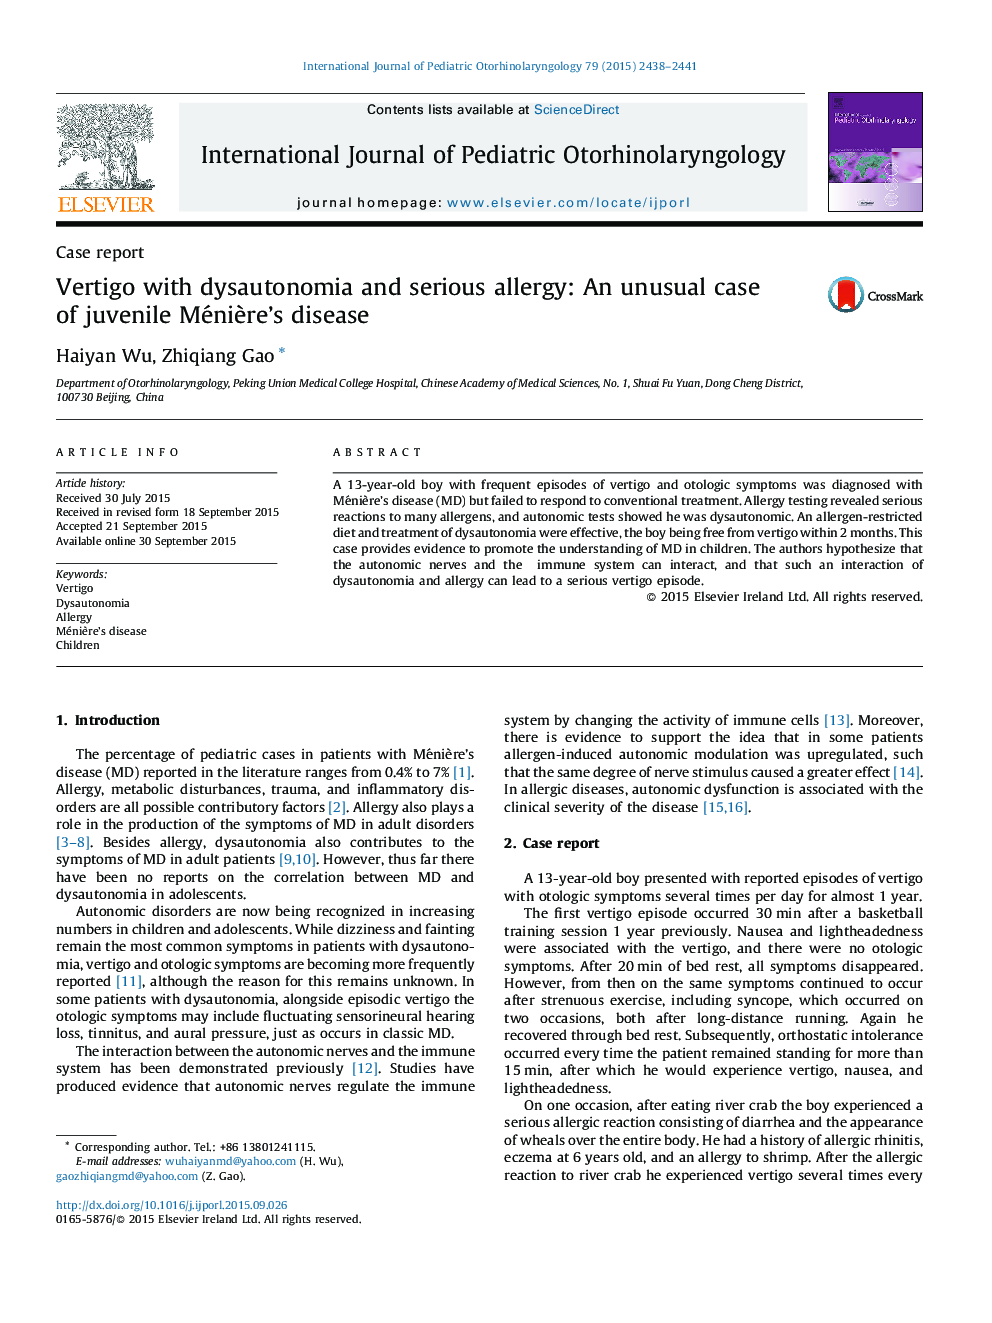 Vertigo with dysautonomia and serious allergy: An unusual case of juvenile Ménière's disease